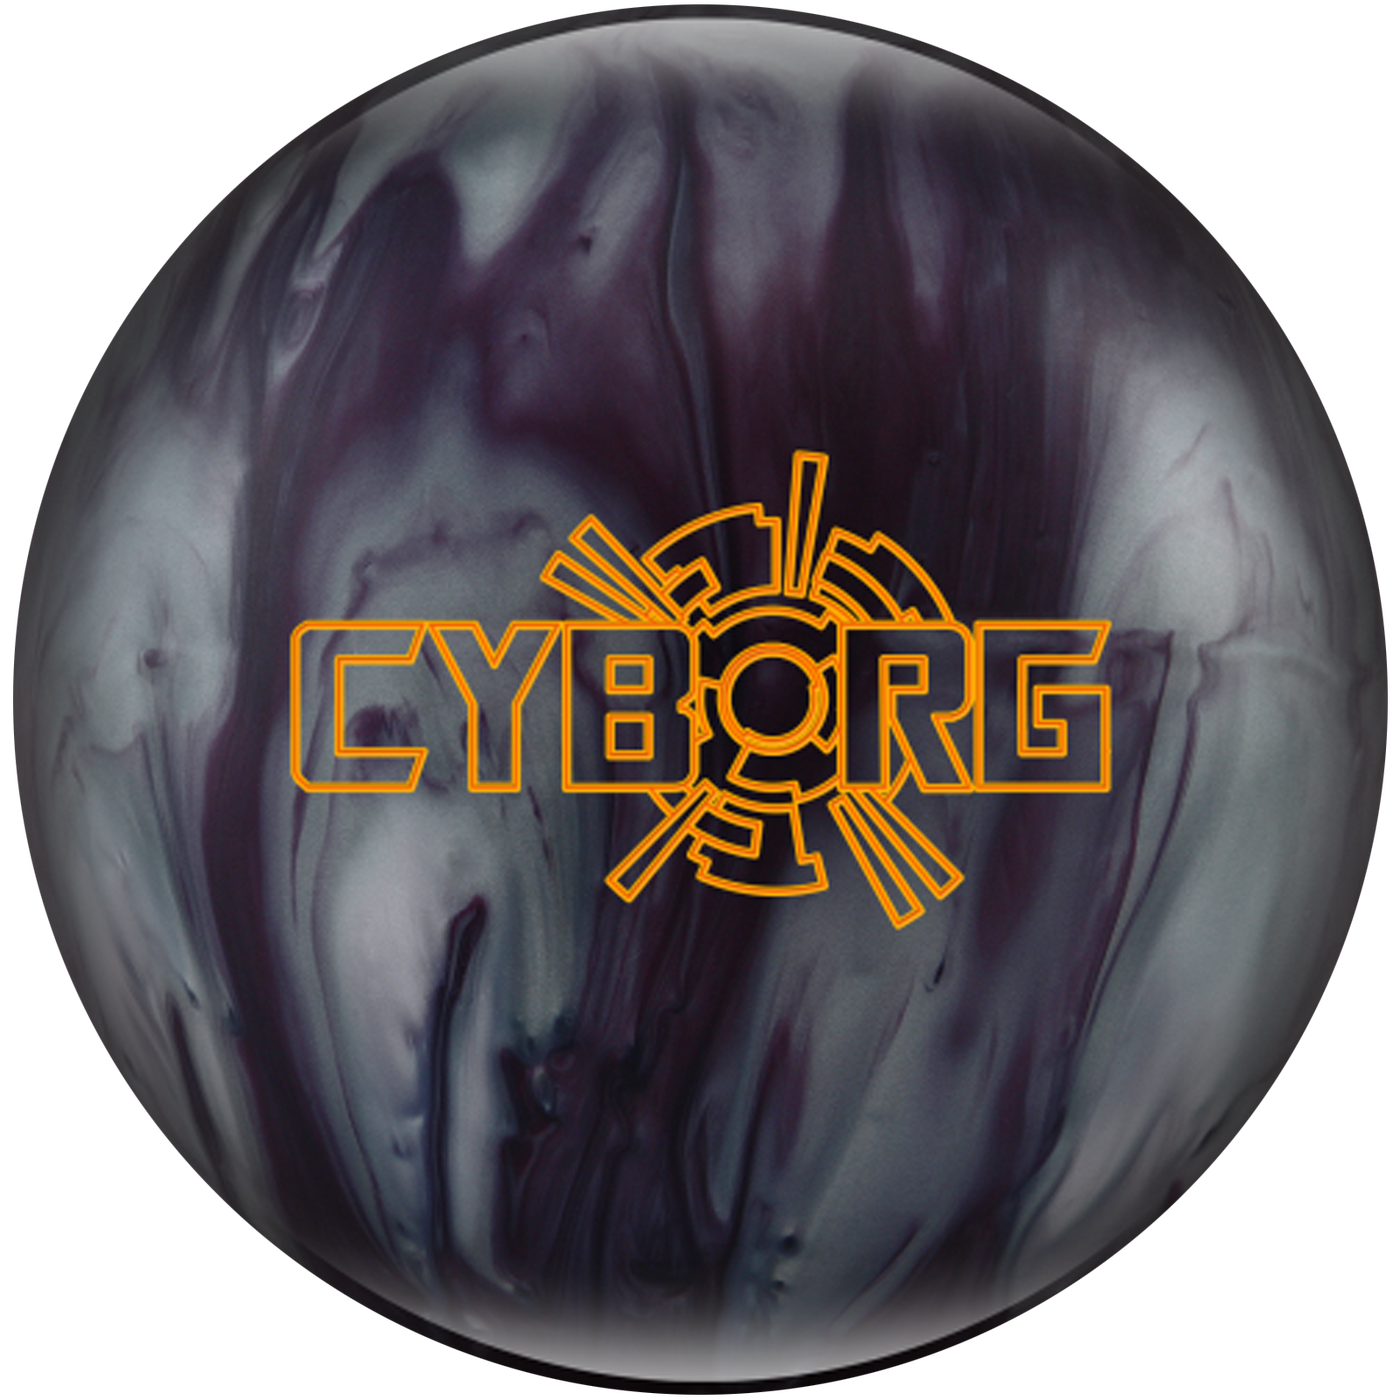 Cyborg Pearl Bowling Ball